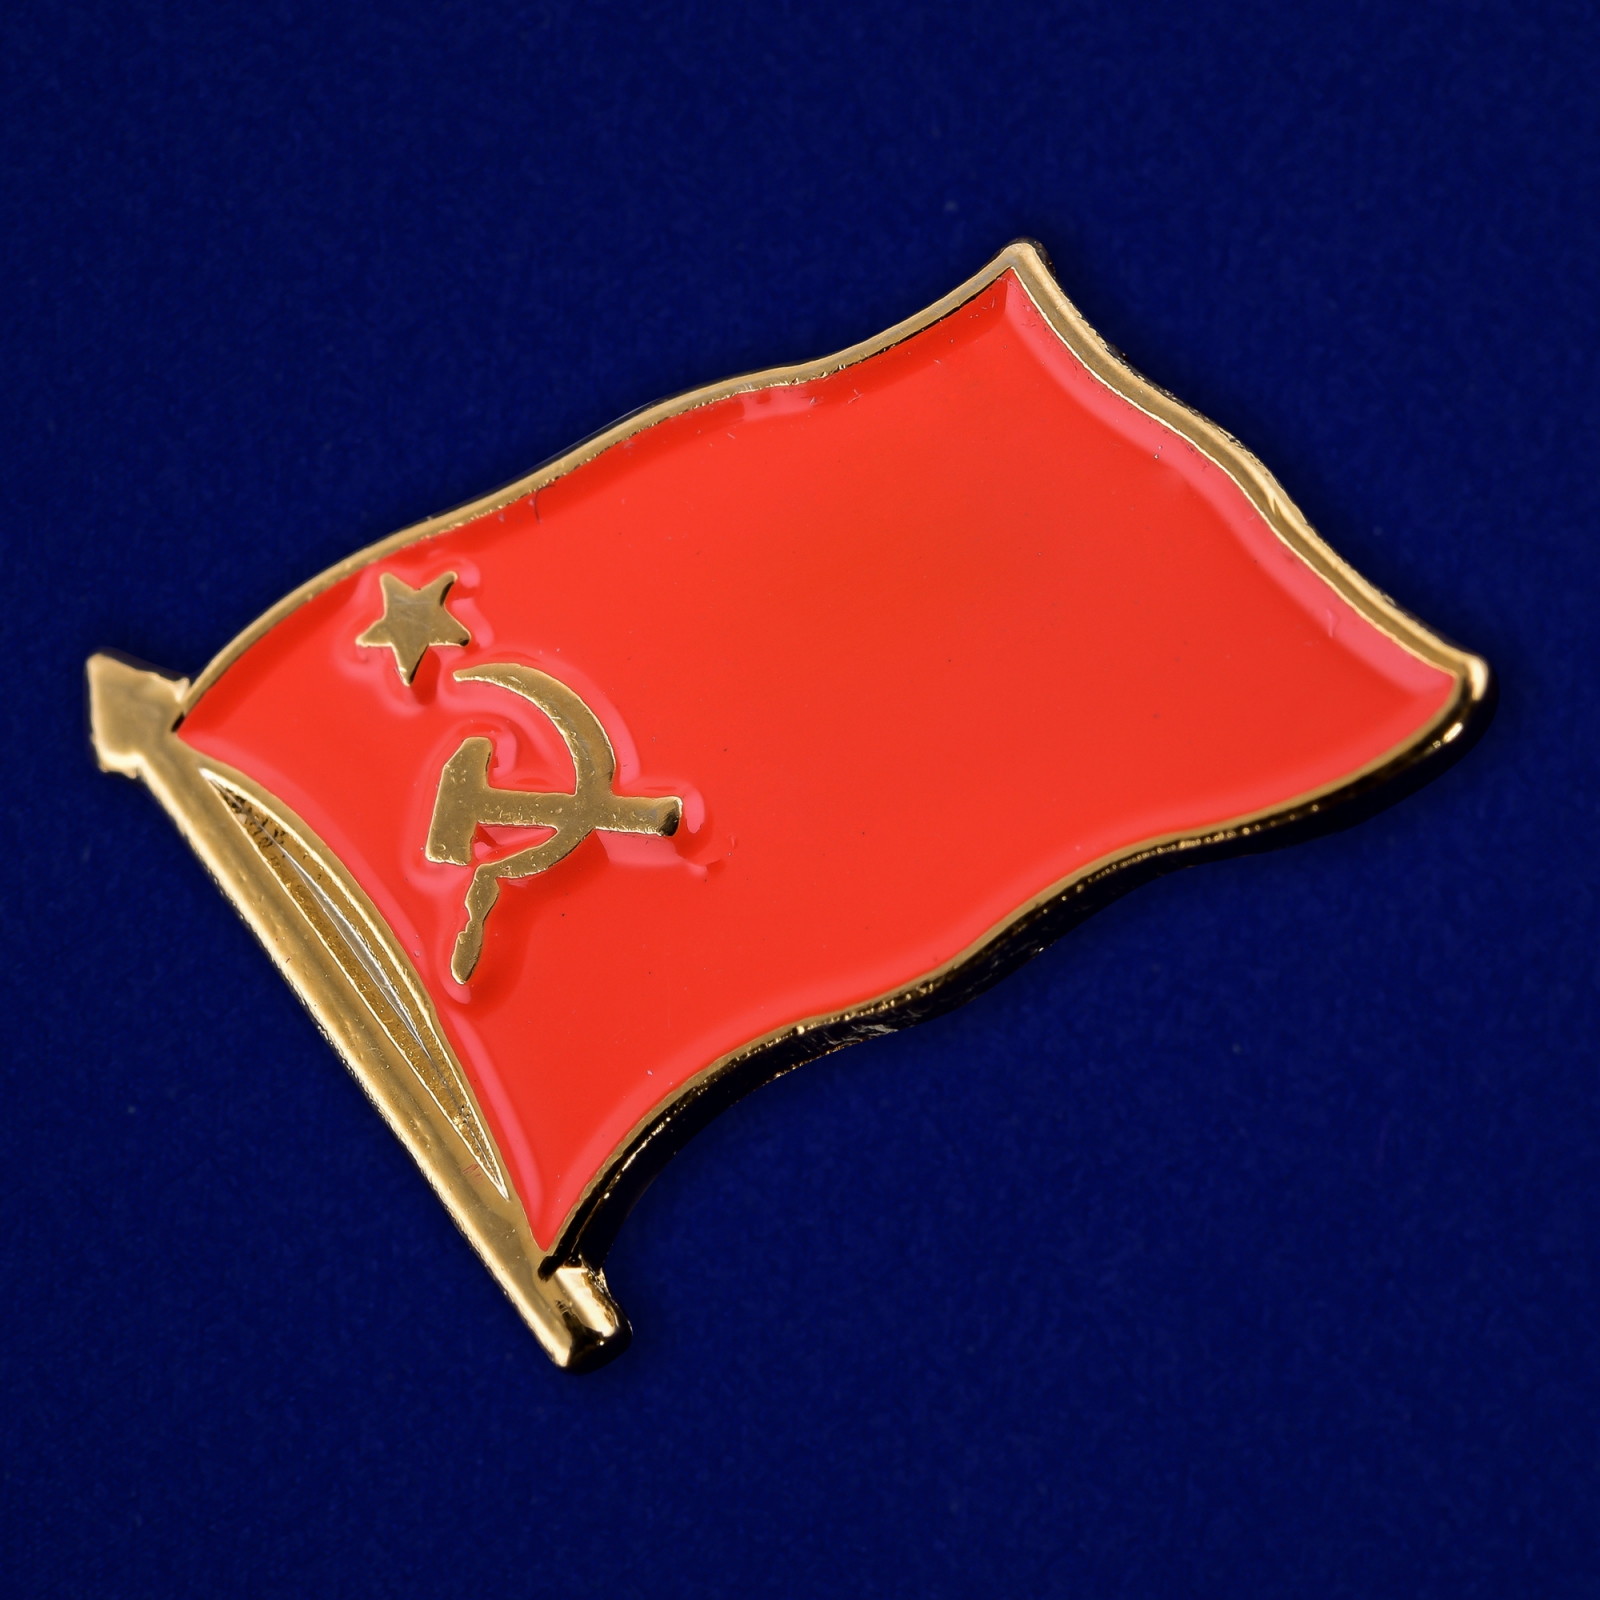 Значок СССР 